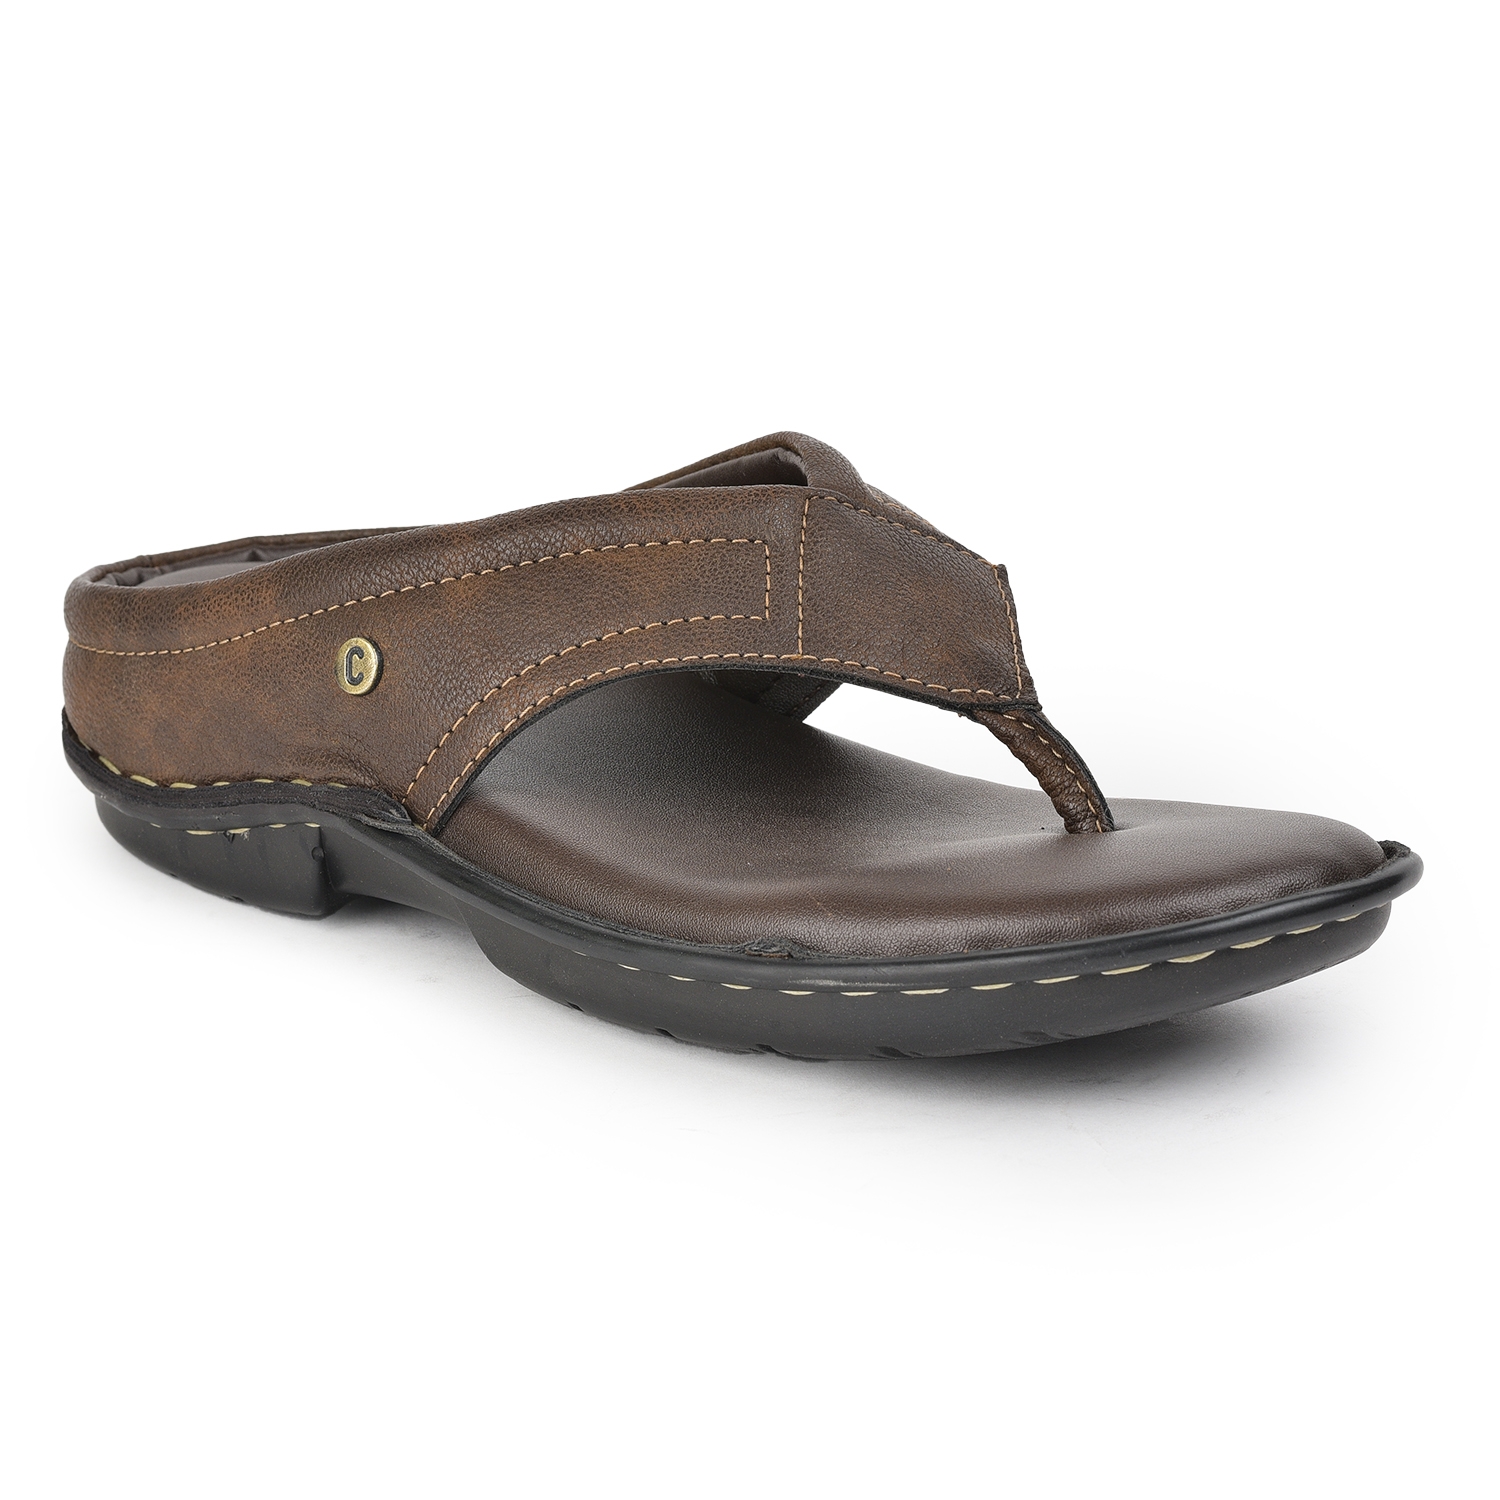 Men's Coolers Brown Slippers